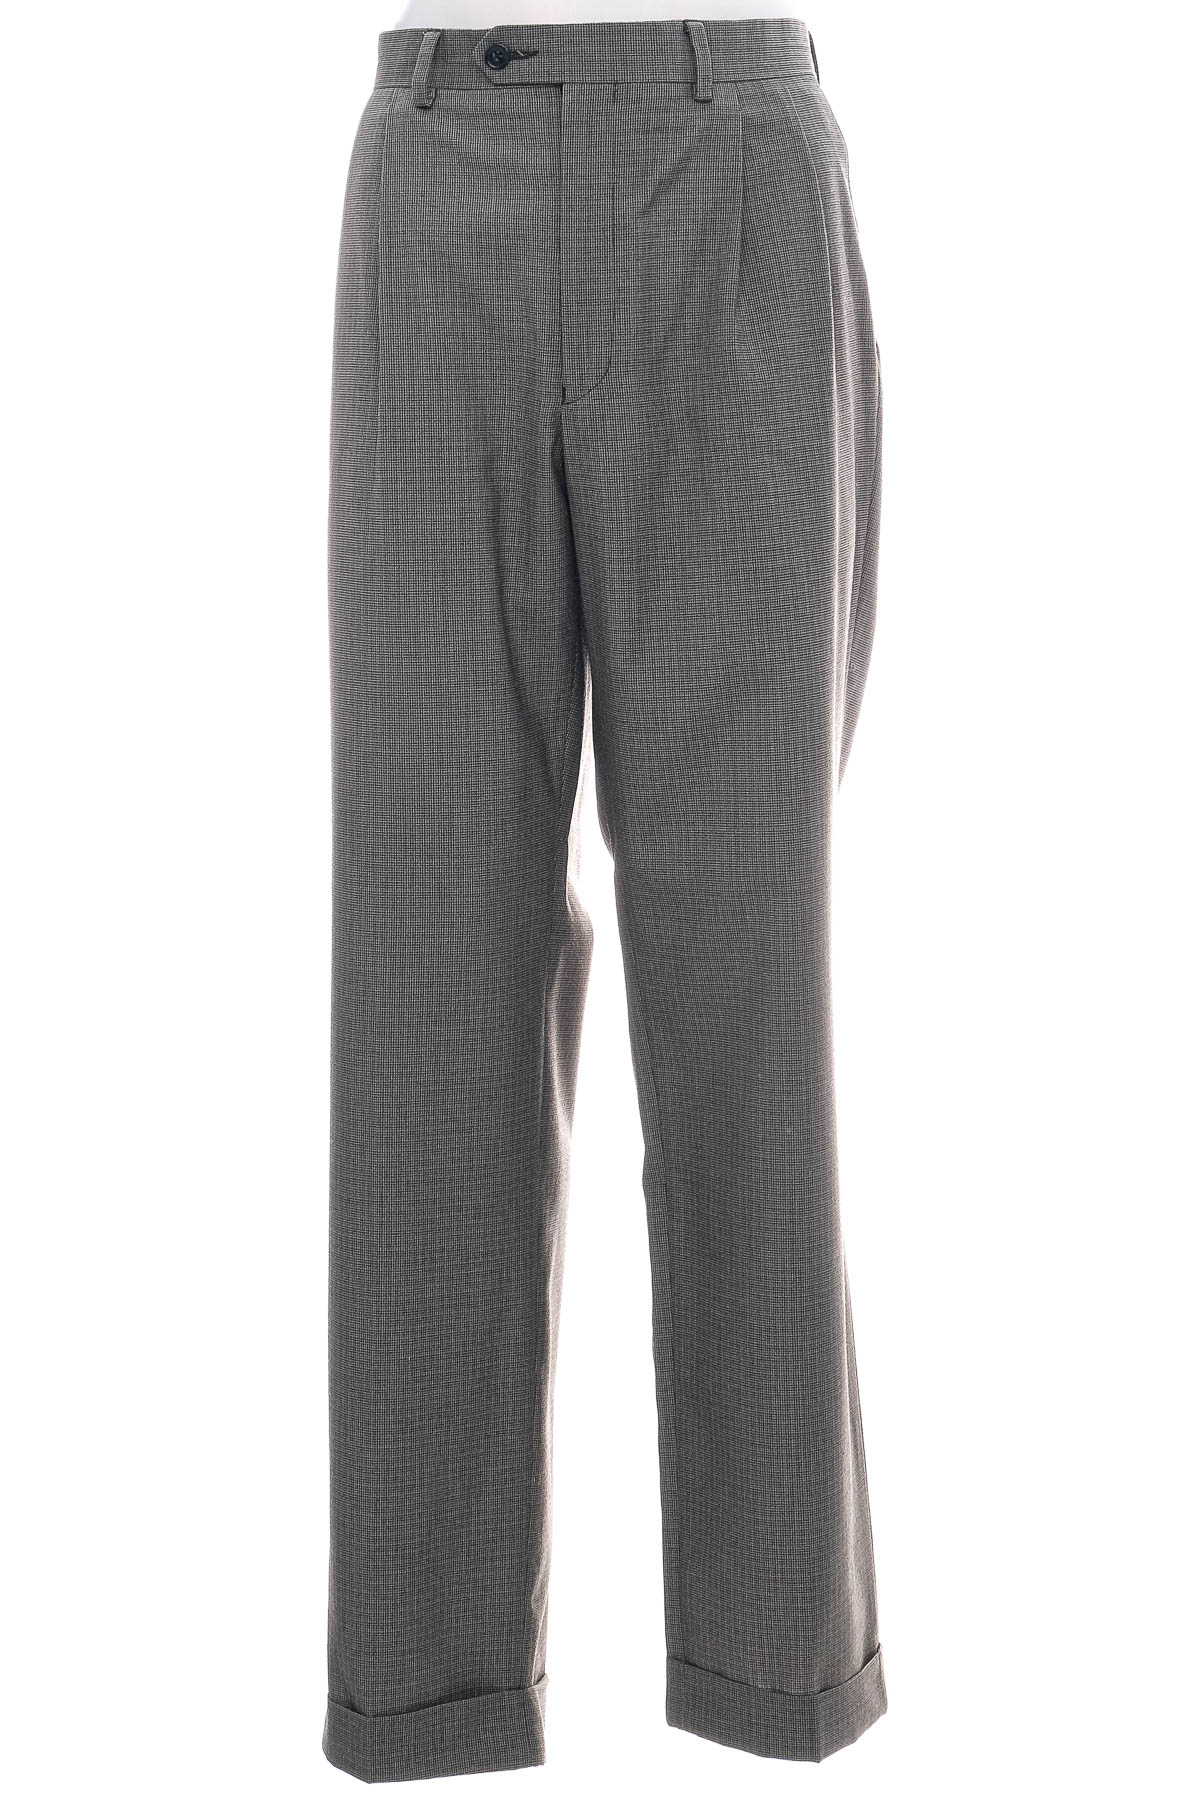 Pantalon pentru bărbați - LAUREN RALPH LAUREN - 0